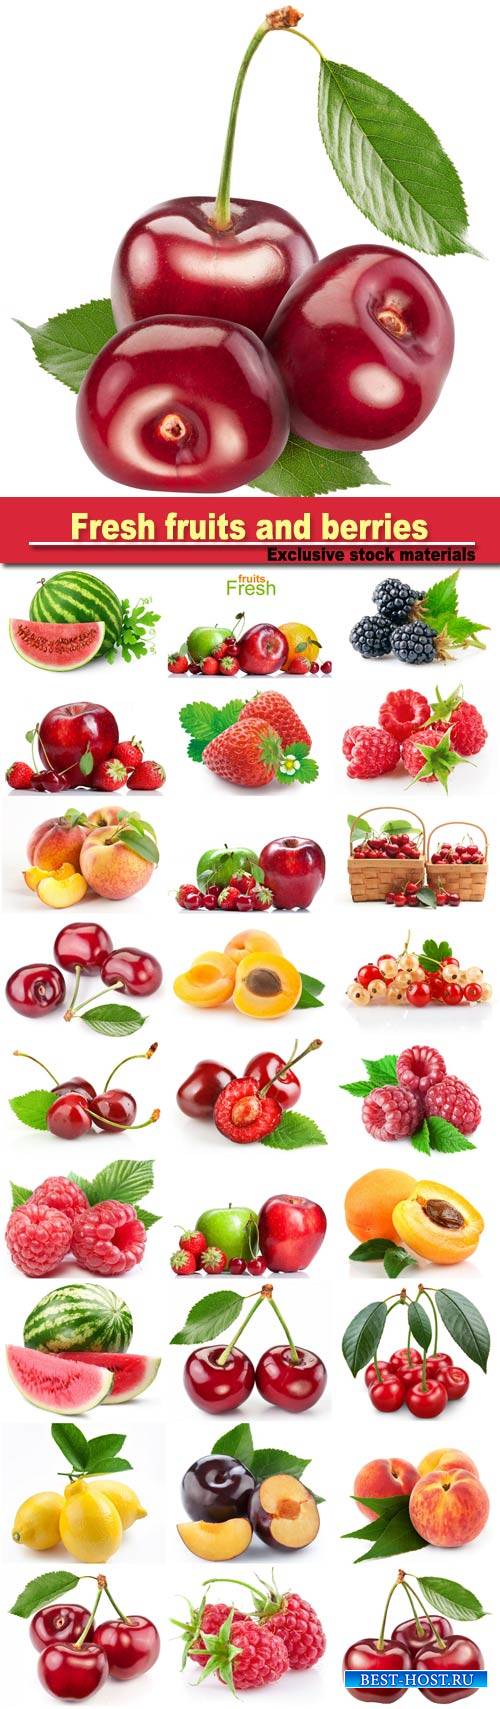 Fresh fruits and berries: raspberries, strawberries, peaches, apricots, cherries